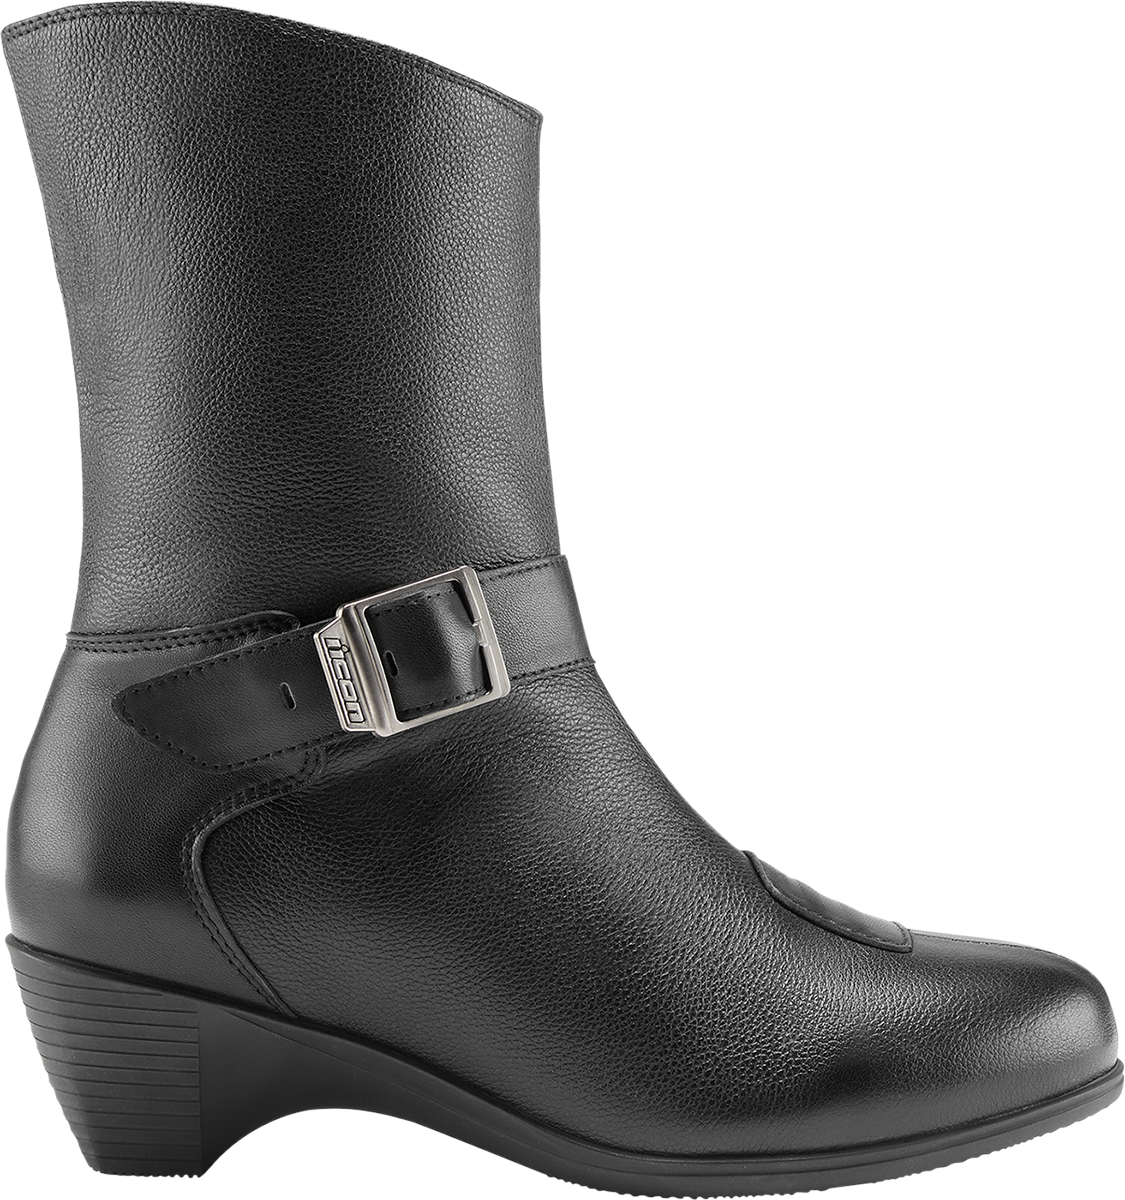 ICON Women's Tuscadero™ Boots - Black - US 7.5 3403-1190